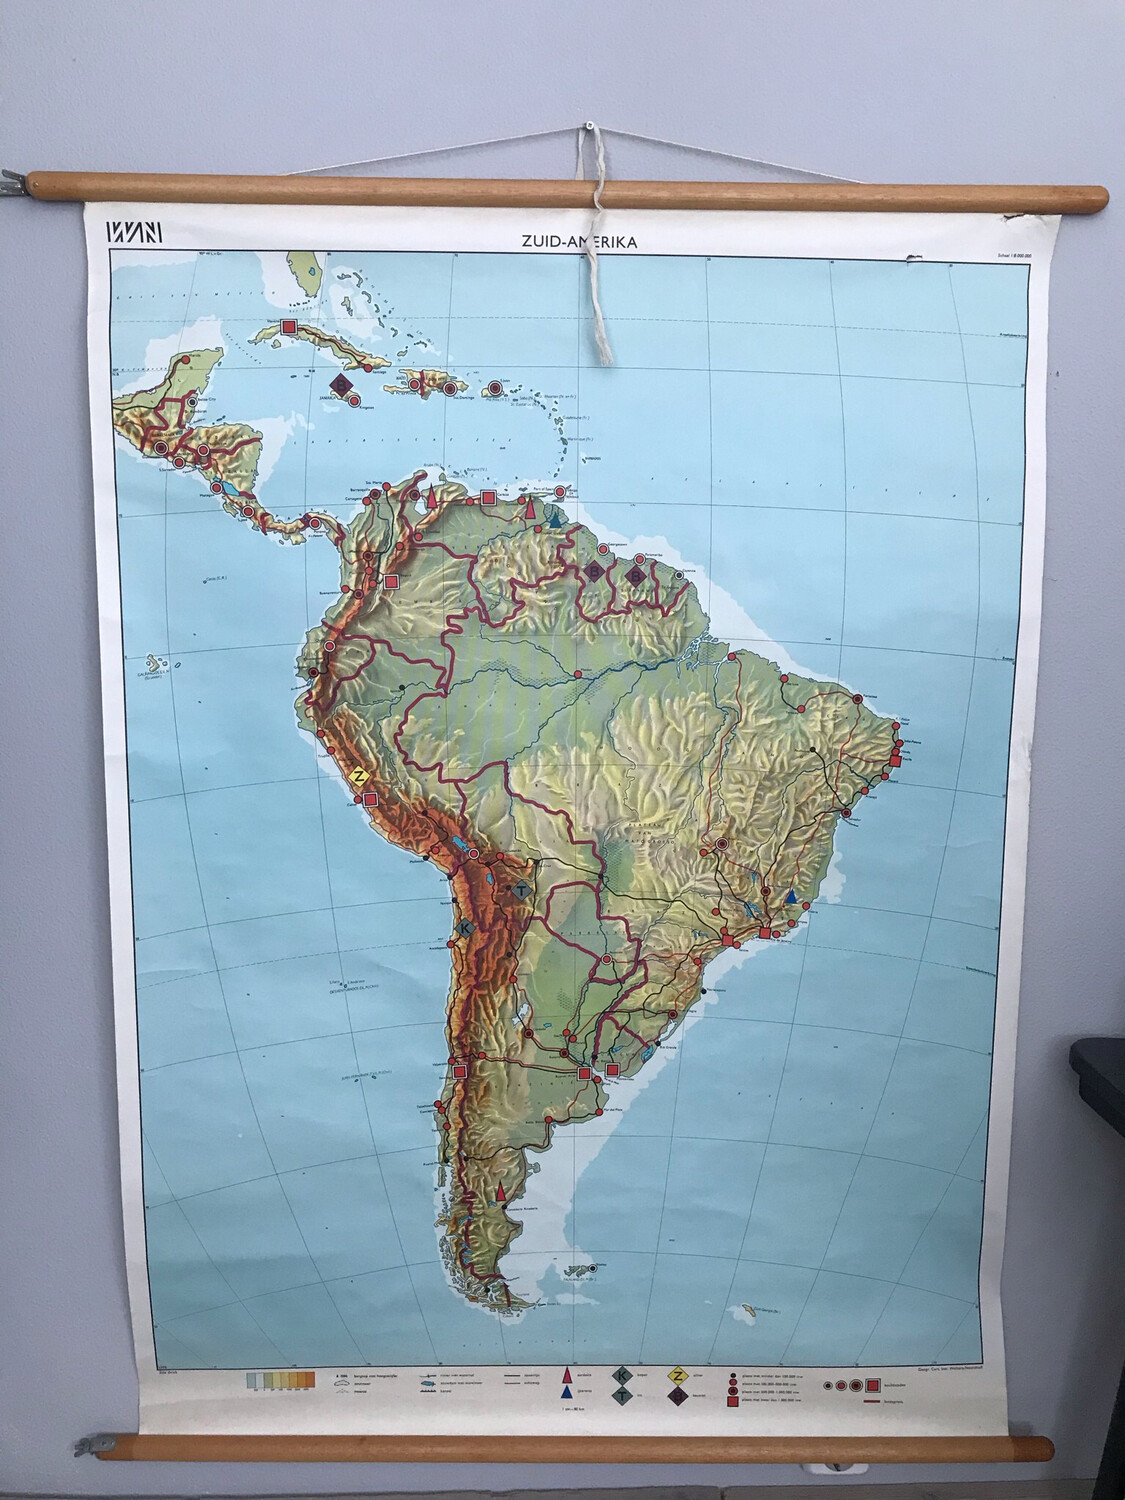 Zuid Amerika